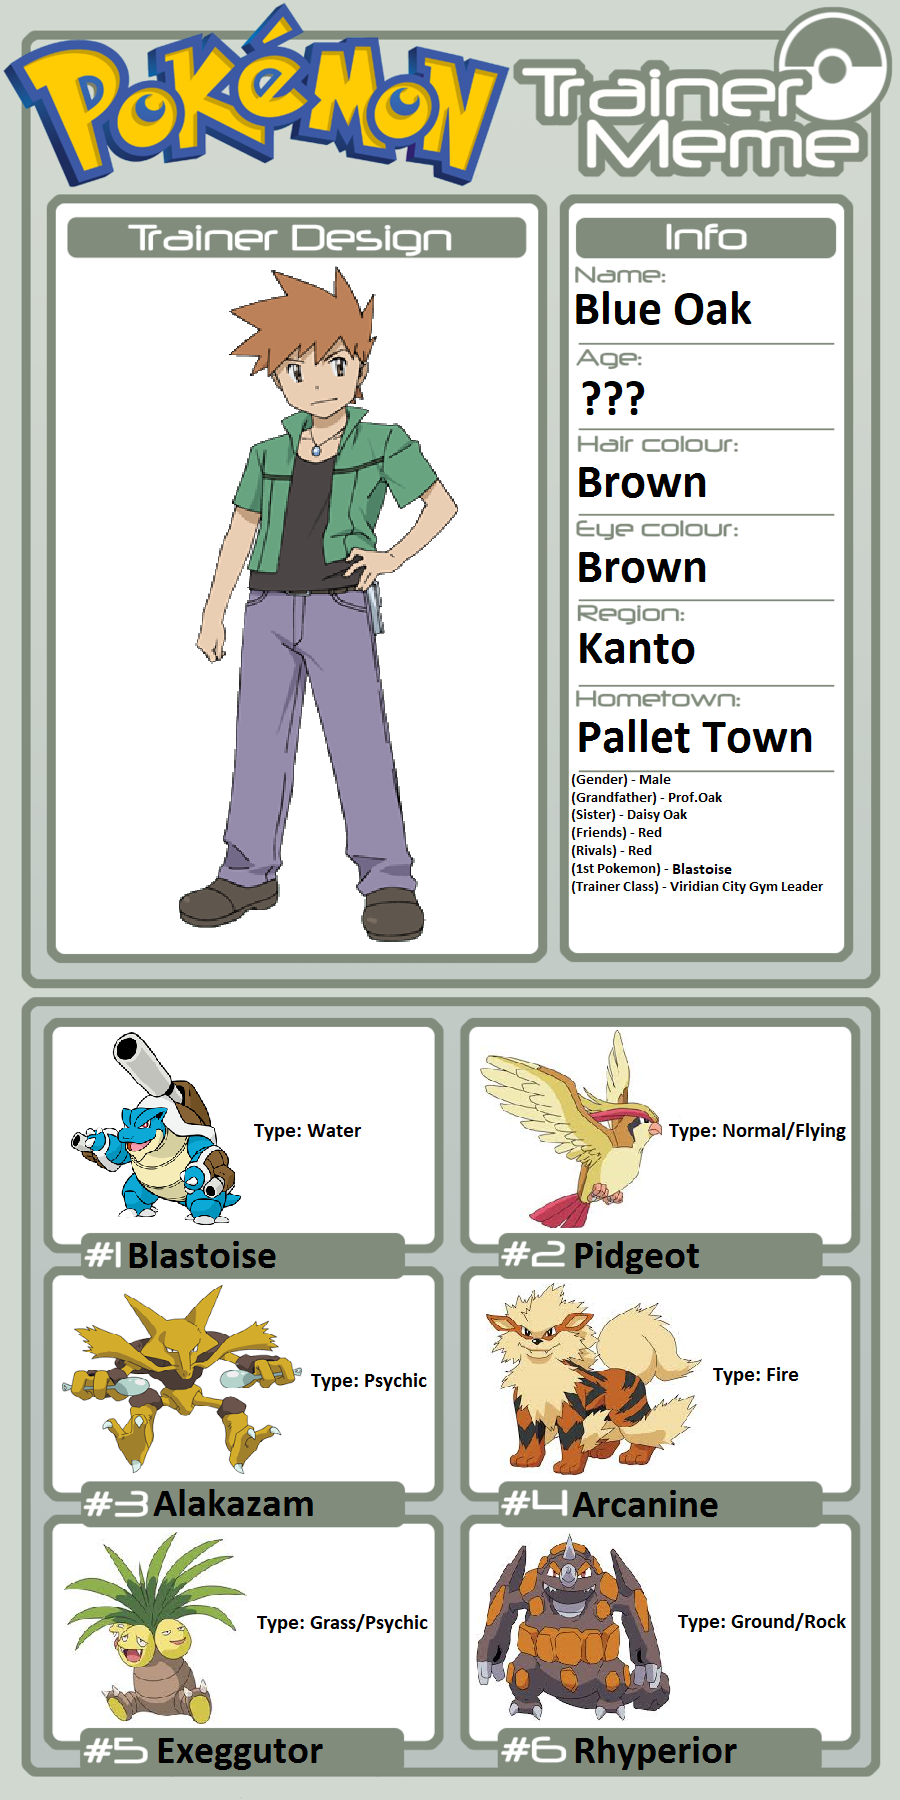 Trainer Profile: Green (or Blue) Oak